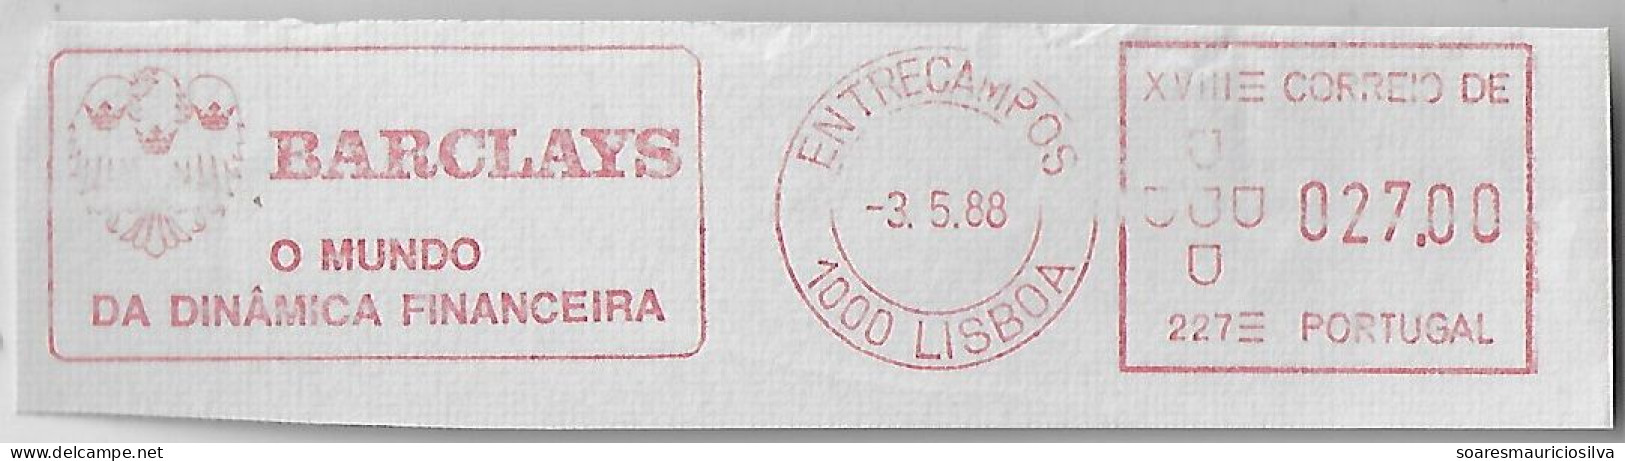 Portugal 1988 Fragment Meter Stamp Hasler Mailmaster Slogan Barclays The World Of Financial Dynamics Lisbon Entrecampos - Lettres & Documents